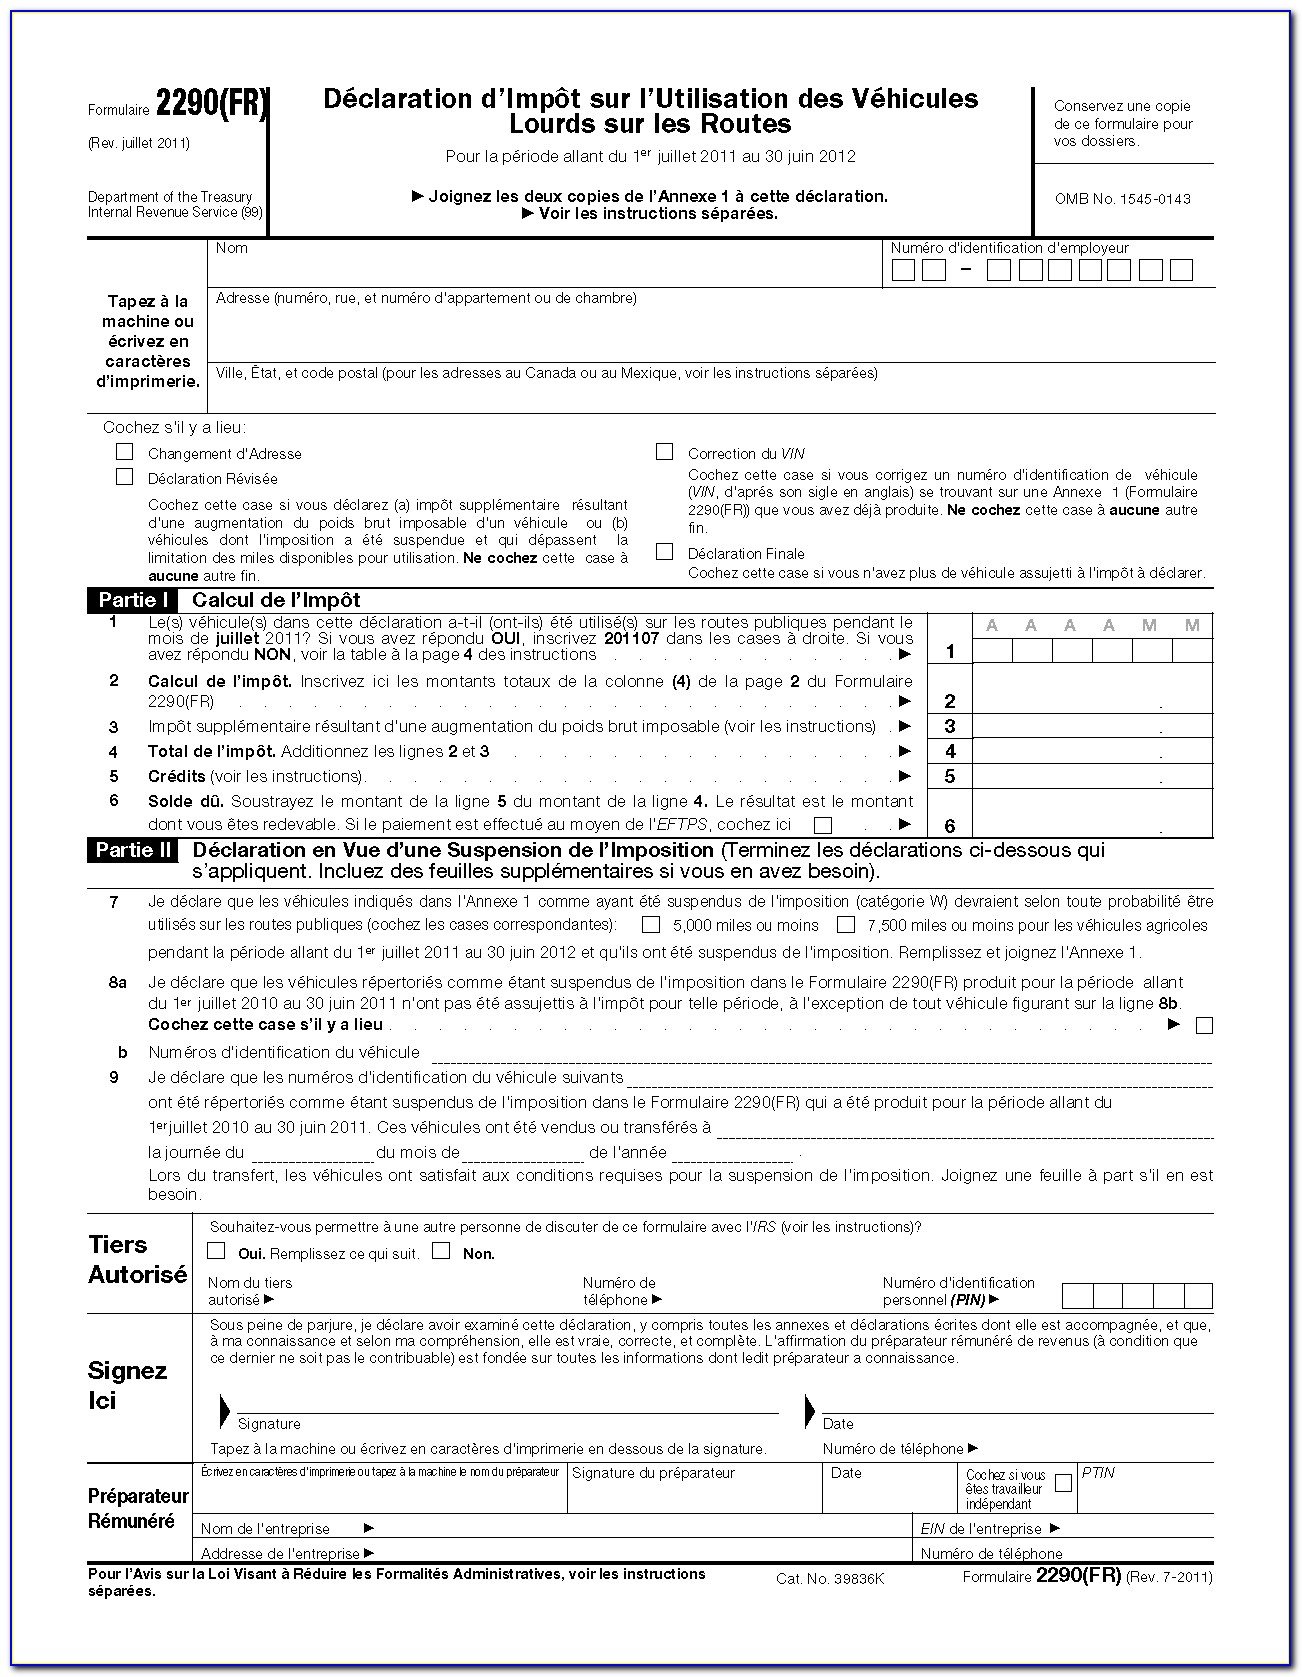 Federal Road Tax Form 2290